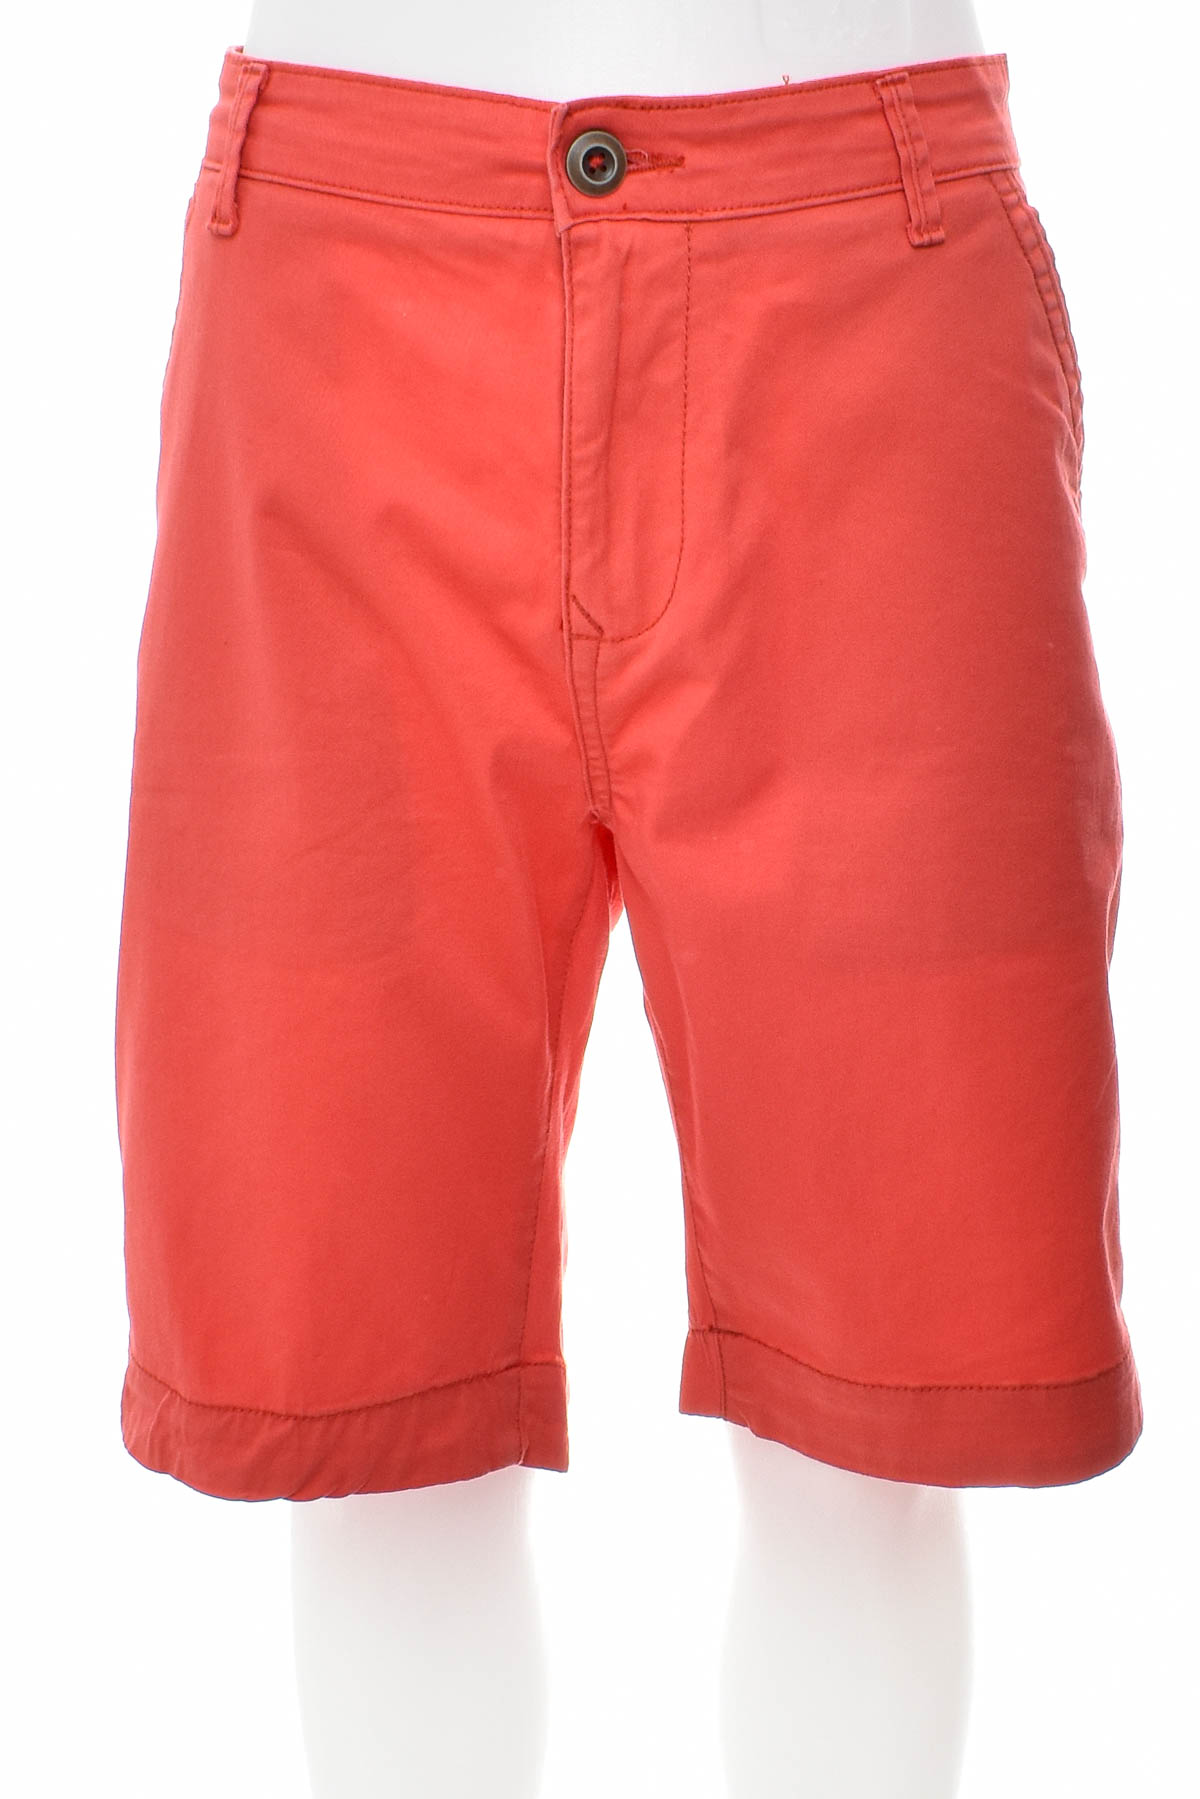 Men's shorts - URBAN WAVE - 0